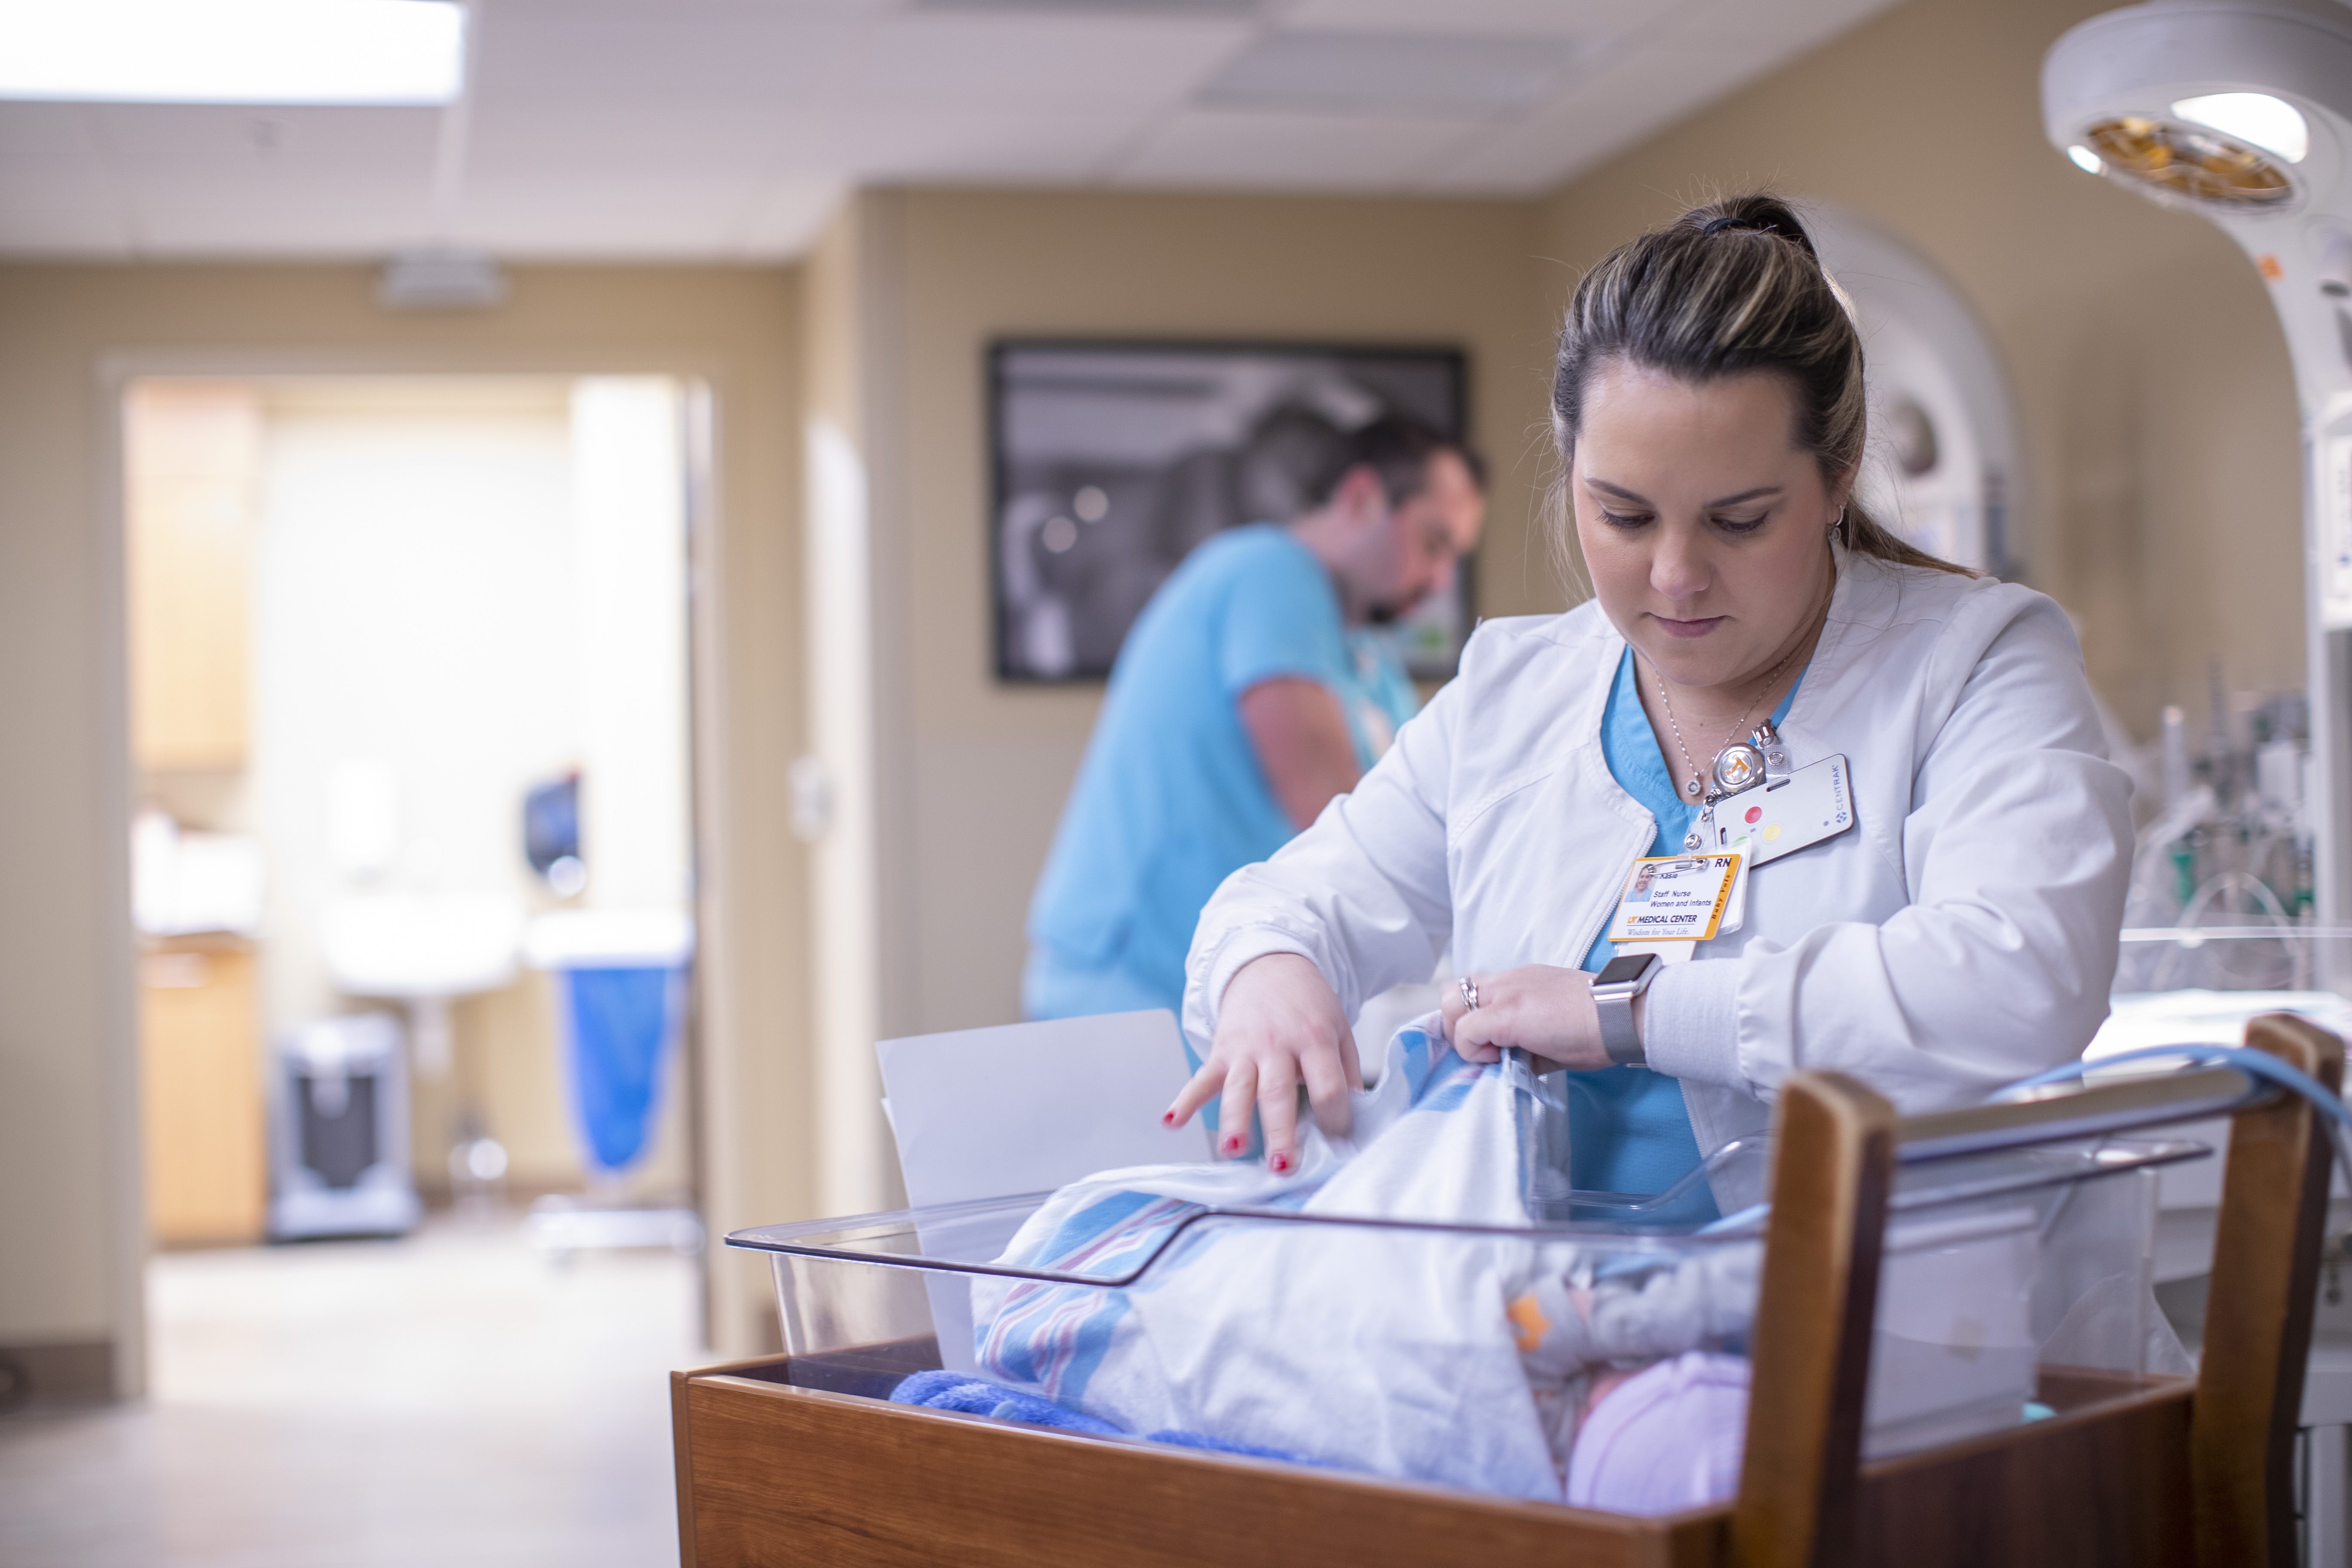 A NICU nurse watches over a premature baby